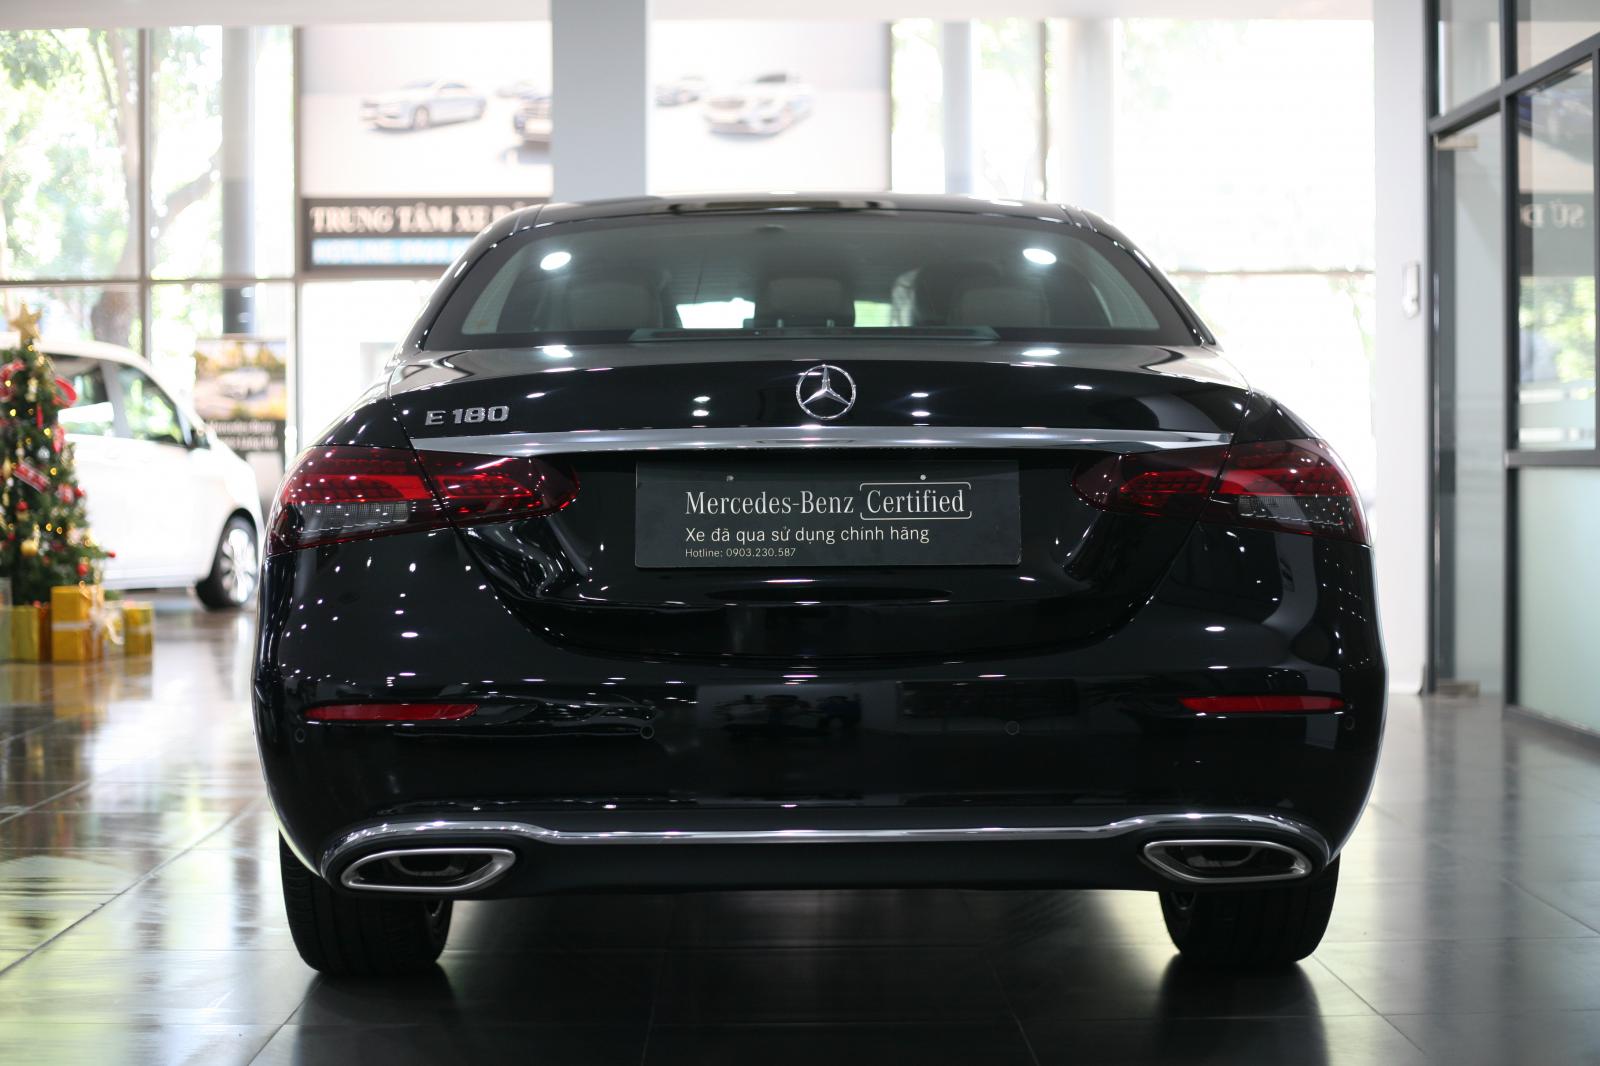 Cần bán Mercedes E180 năm 2021, màu đen